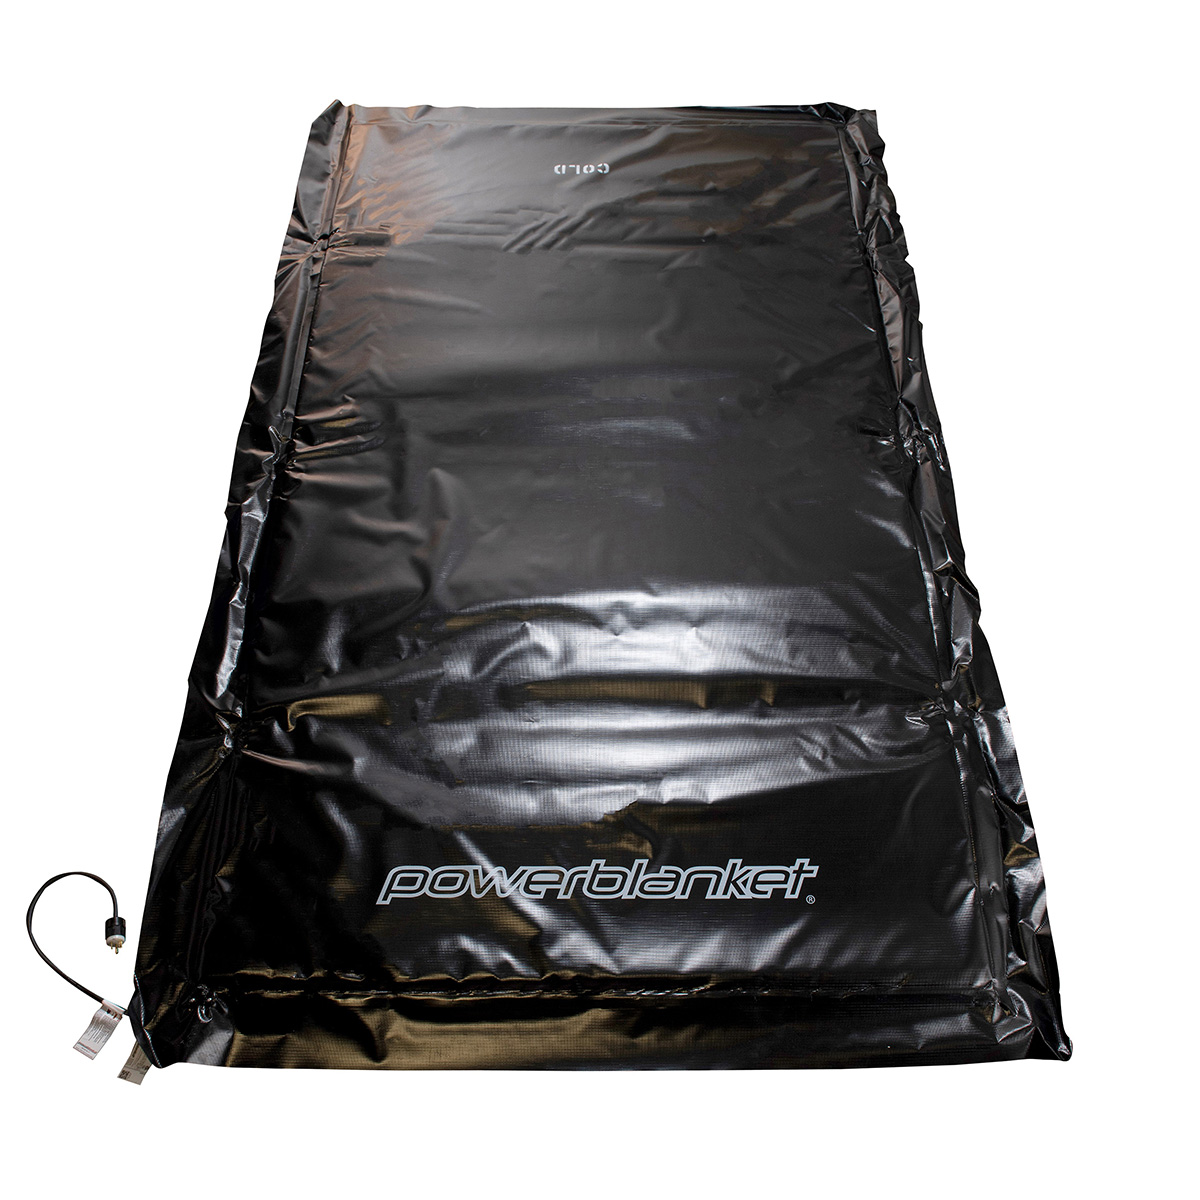 Powerblanket-MD0520 6' x 21' Concrete Curing Flat Heating Blanket 